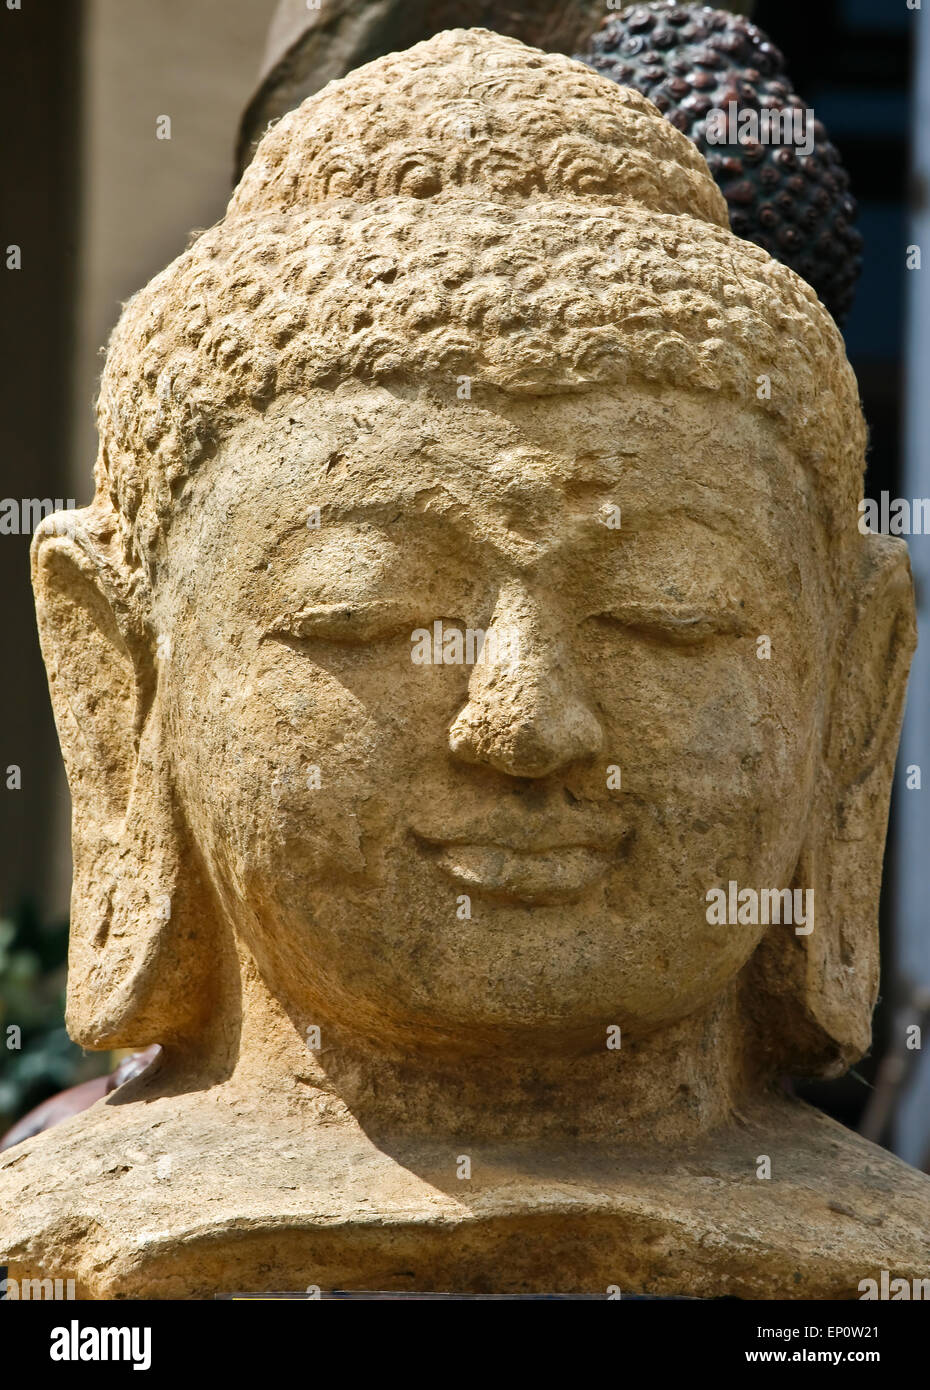 budha statue head Stock Photo